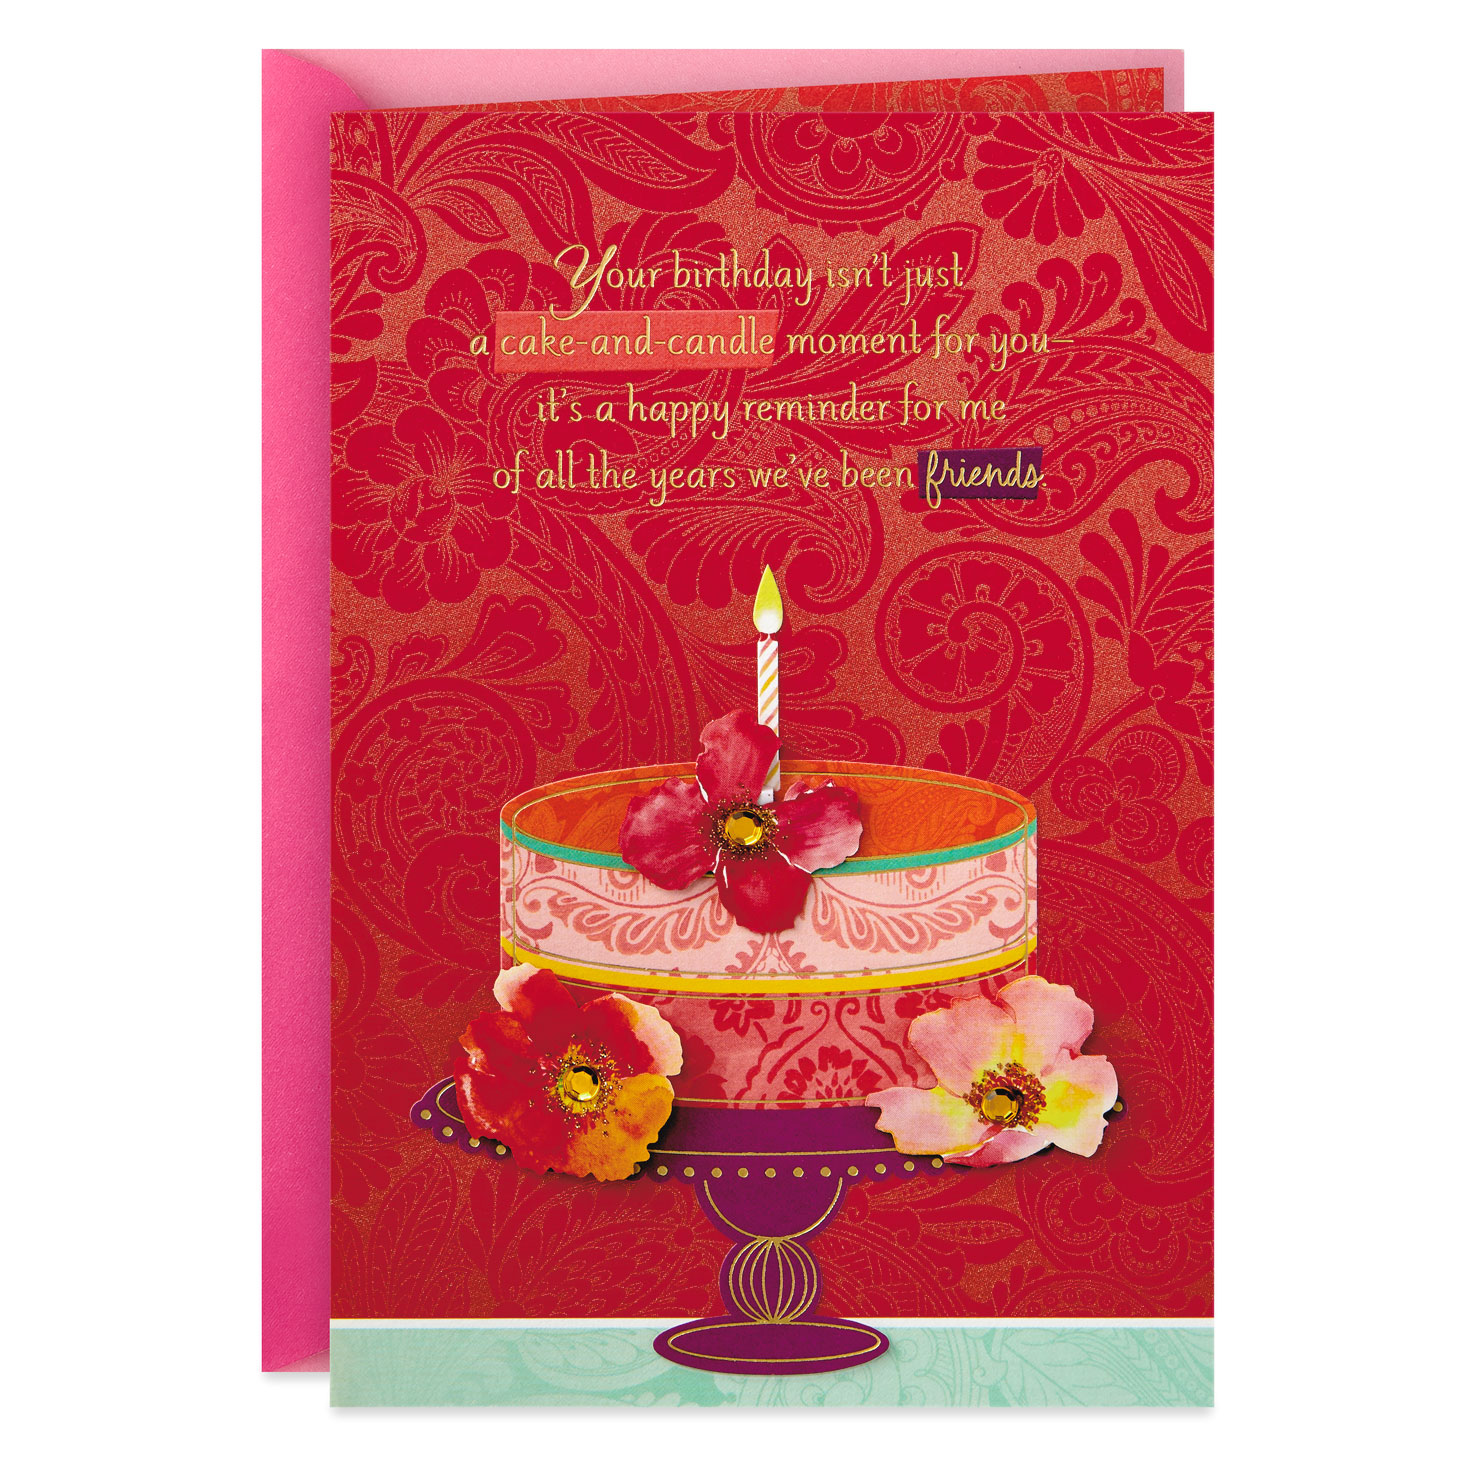 Happy We're Friends Birthday Card - Greeting Cards - Hallmark